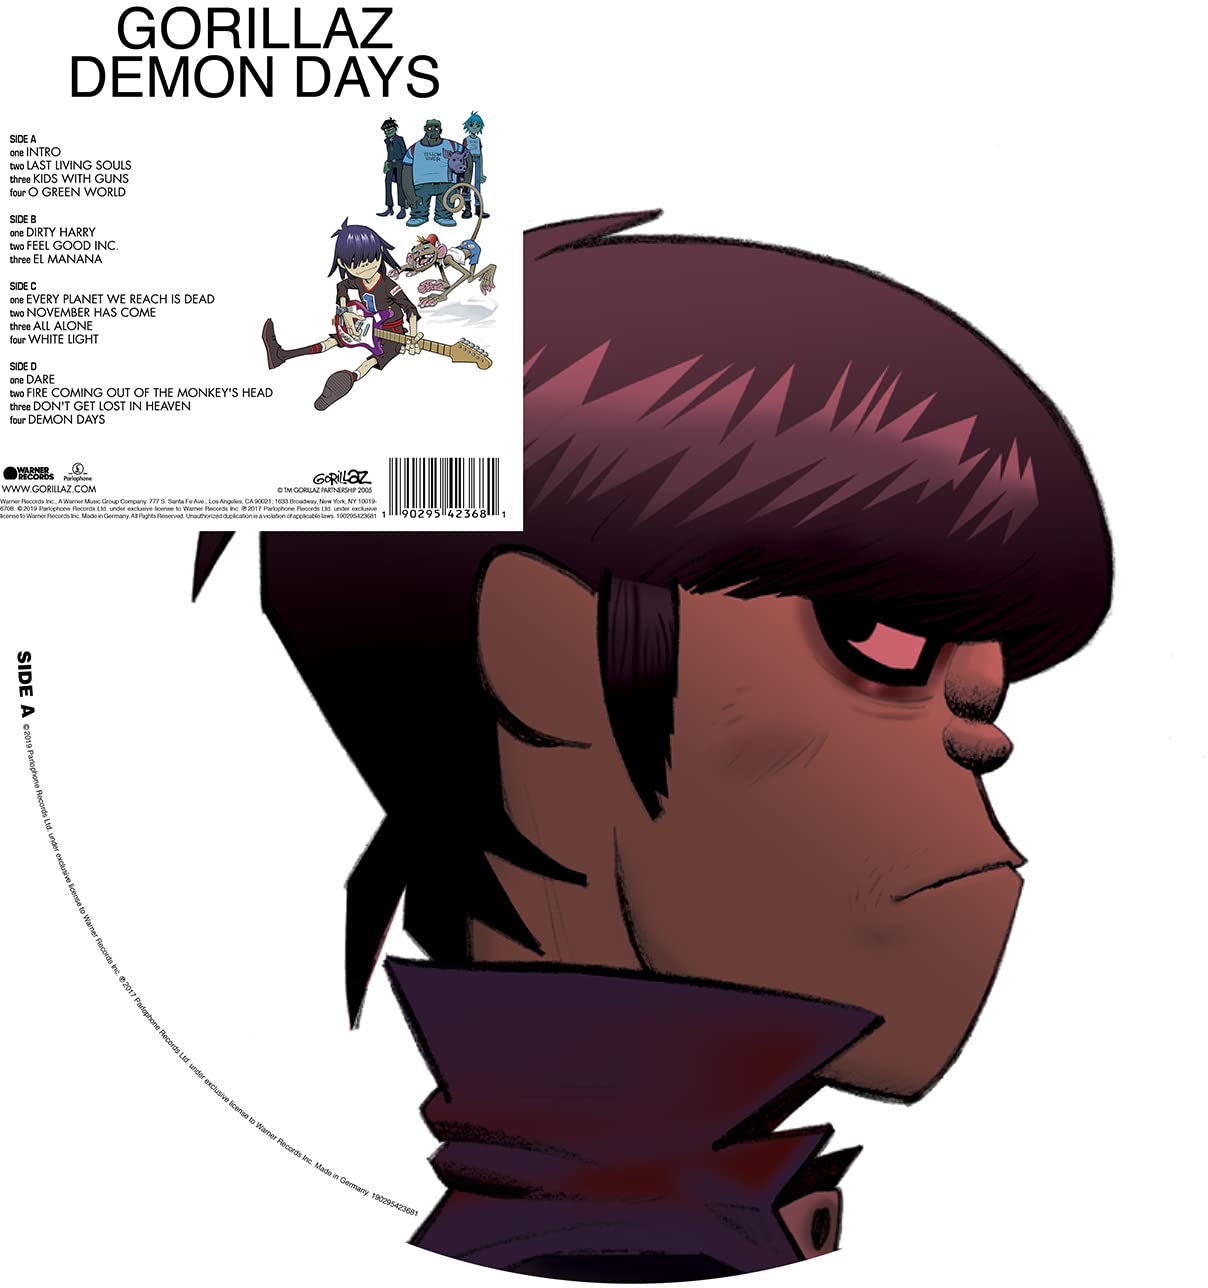 Gorillaz - Demon Days (Picture Disc)